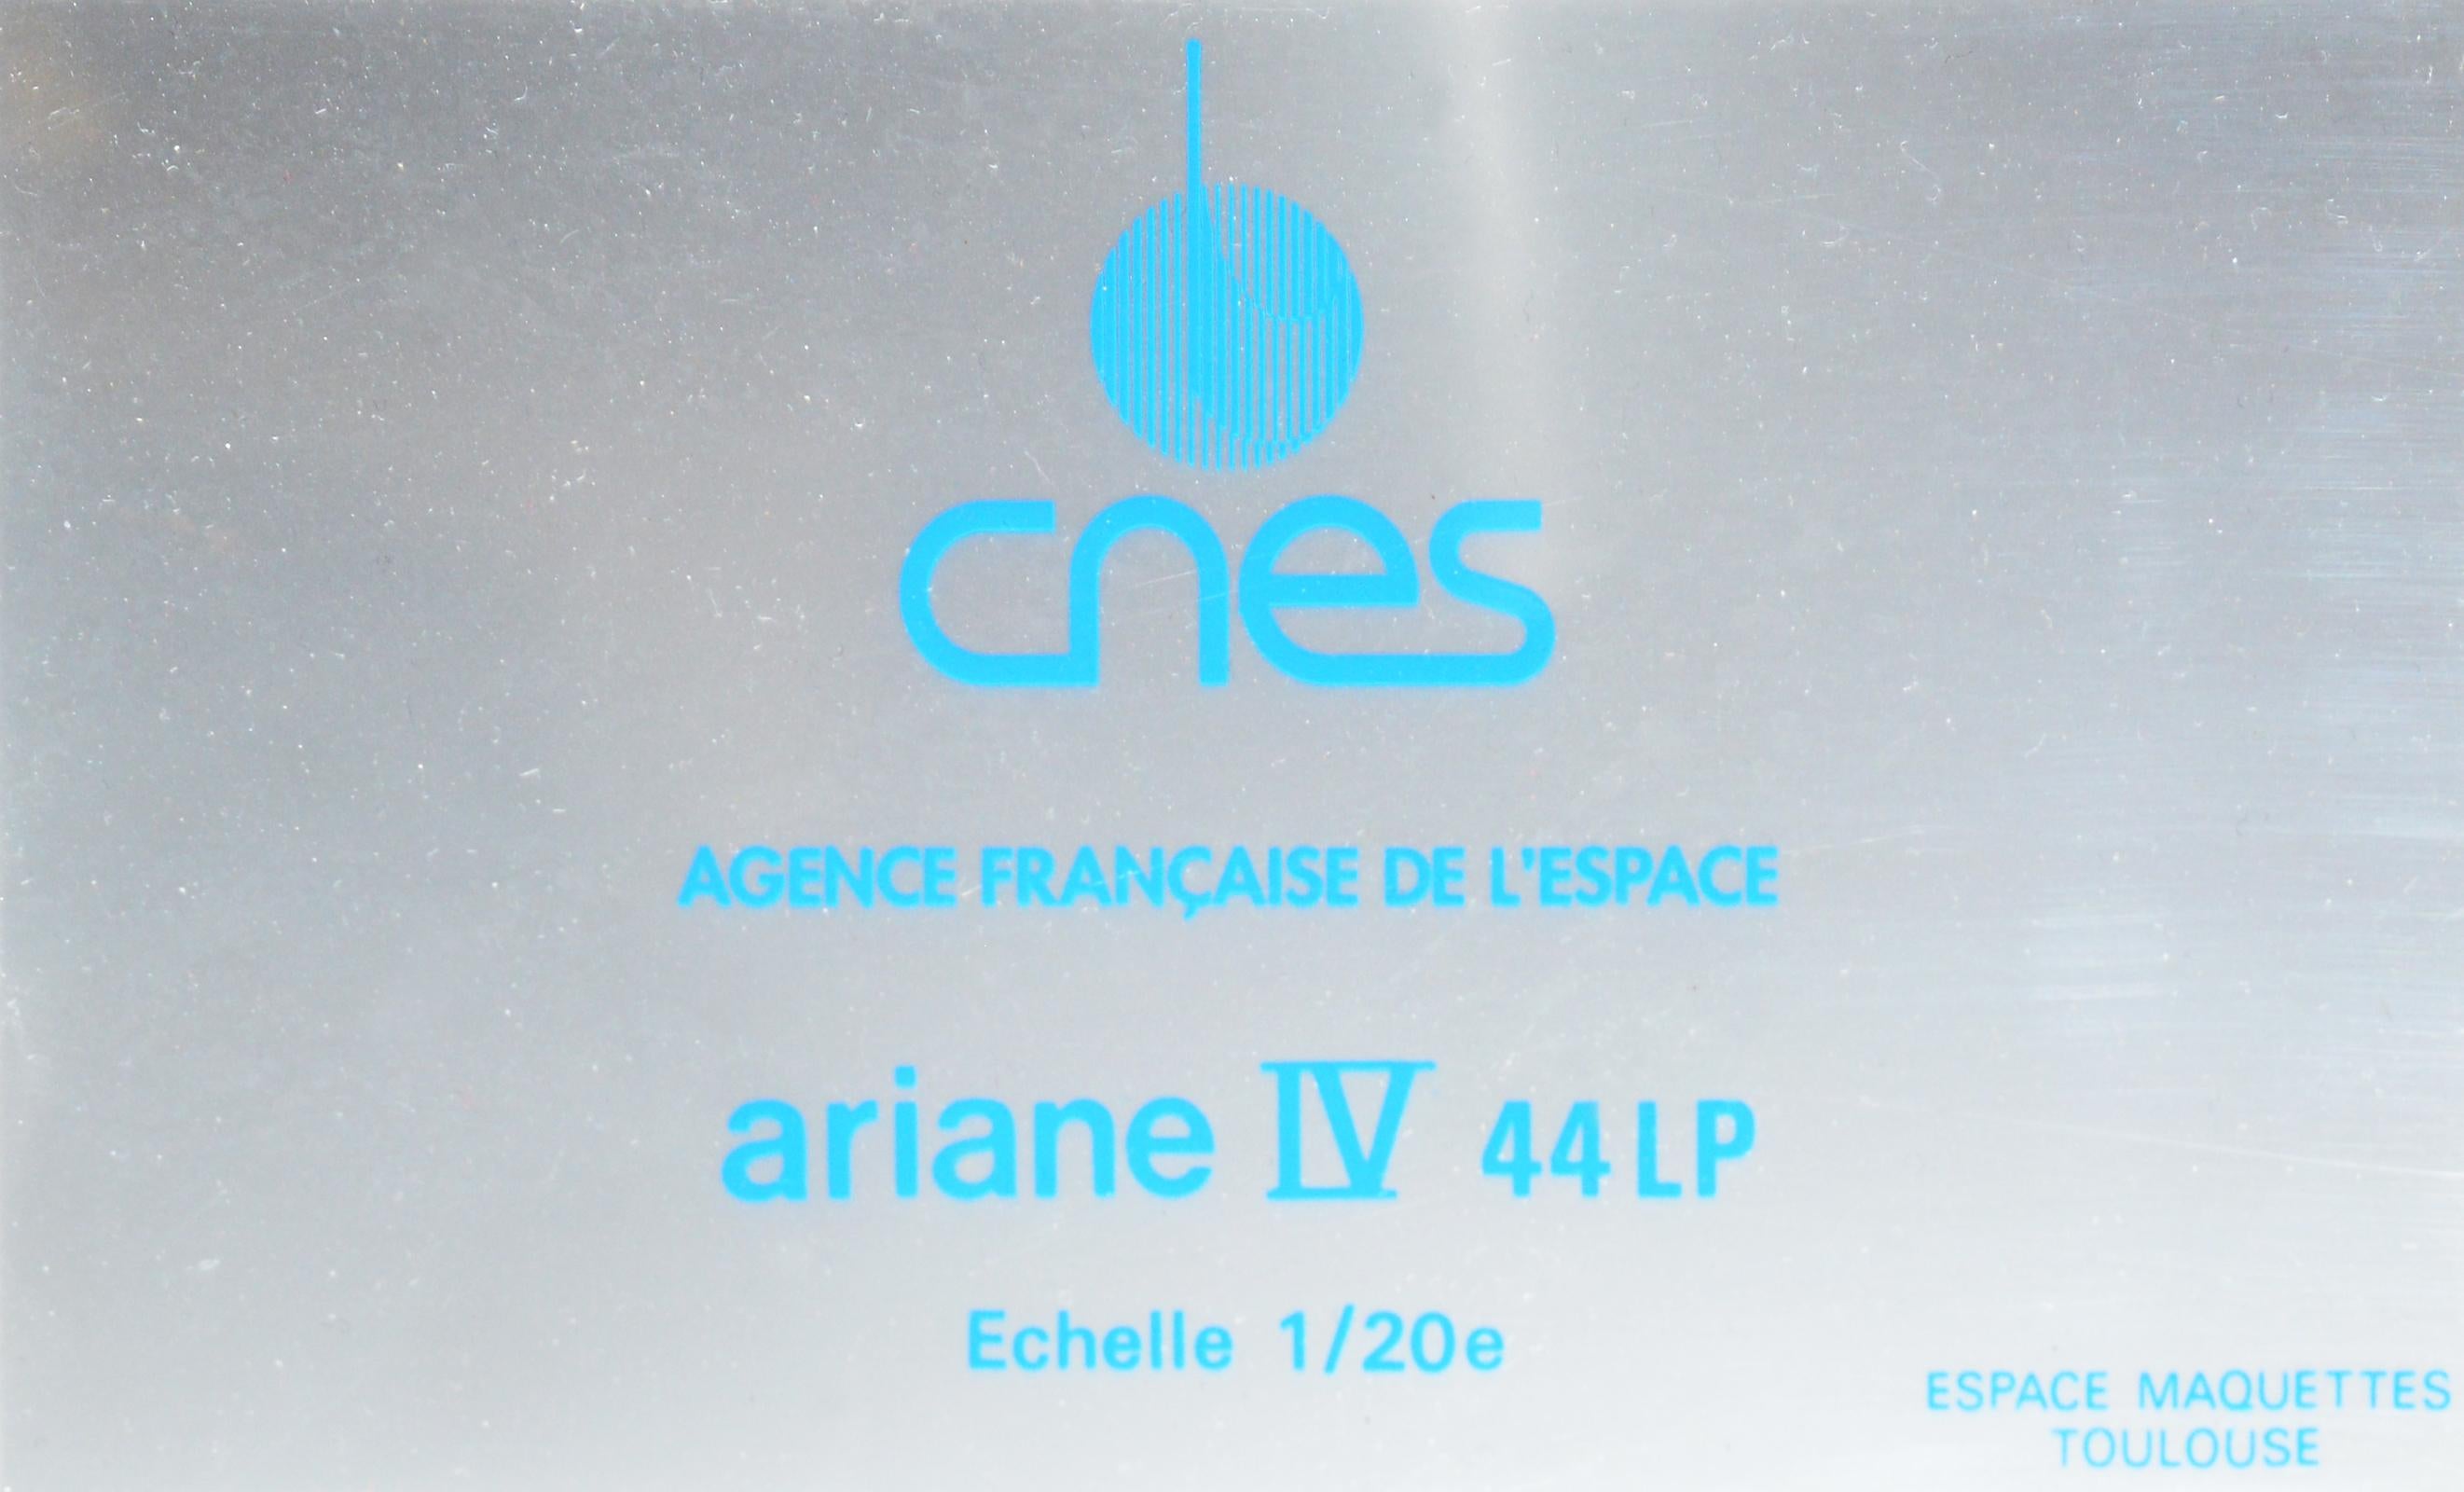 Ariane IV 44lp Rakete Modell im Maßstab 1/20em im Angebot 3